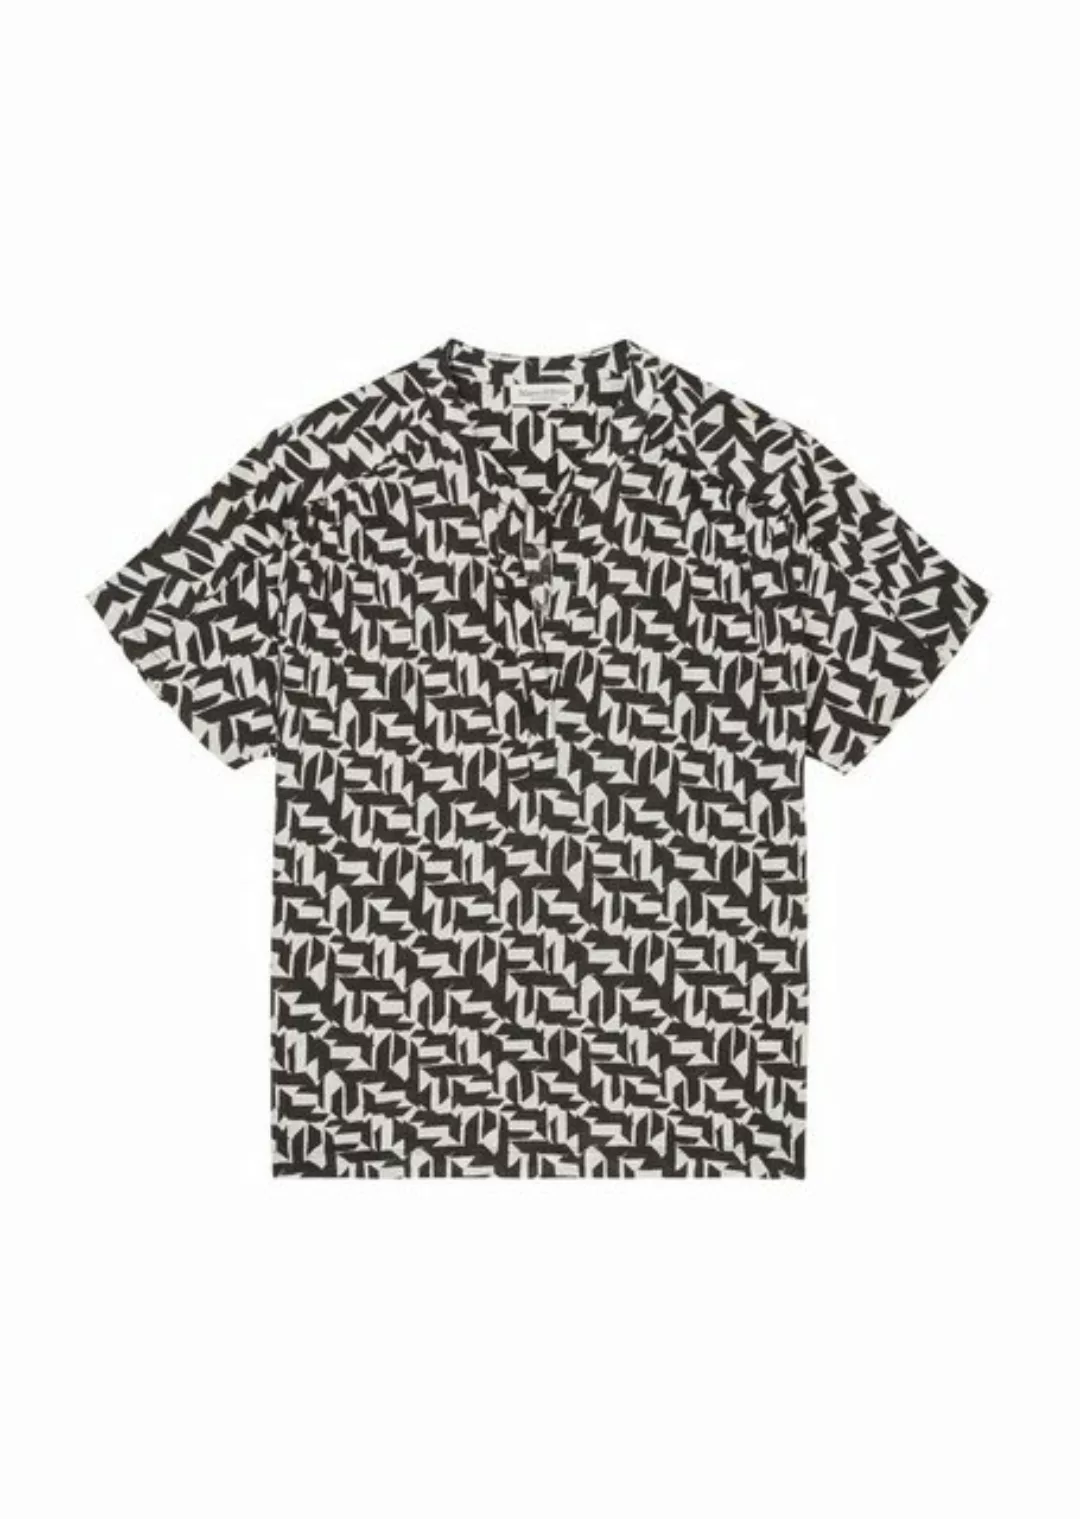 Marc O'Polo Shirtbluse Jersey blouse, short sleeve, aop günstig online kaufen